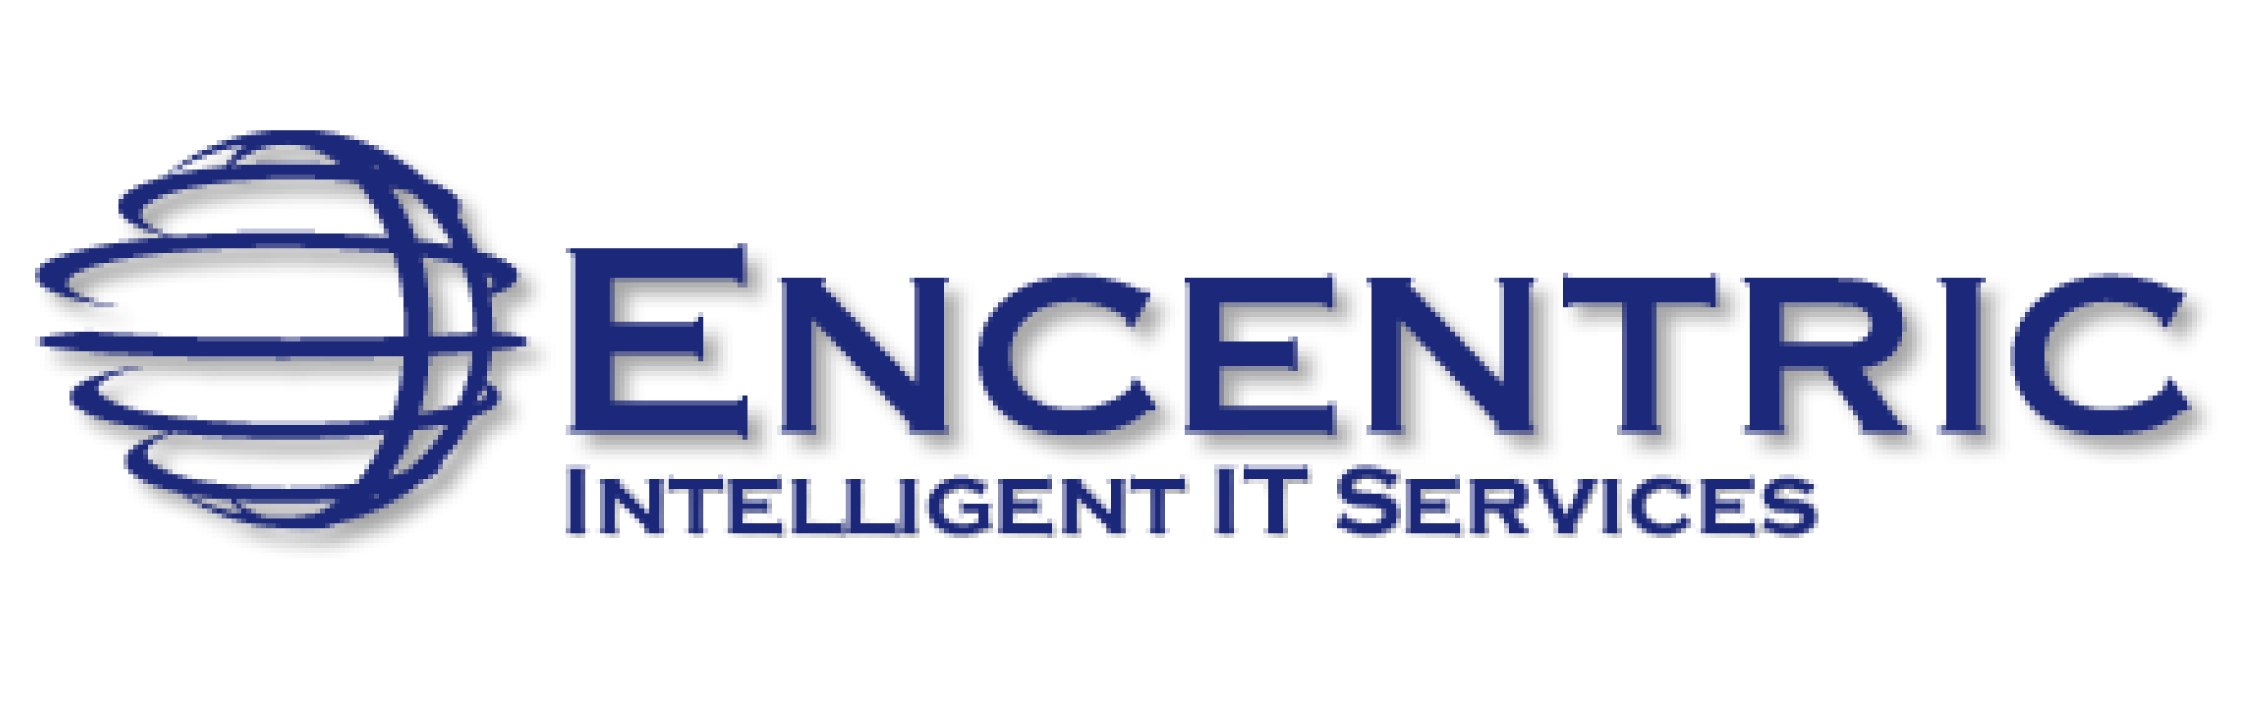 Encentric Intelligent IT Services